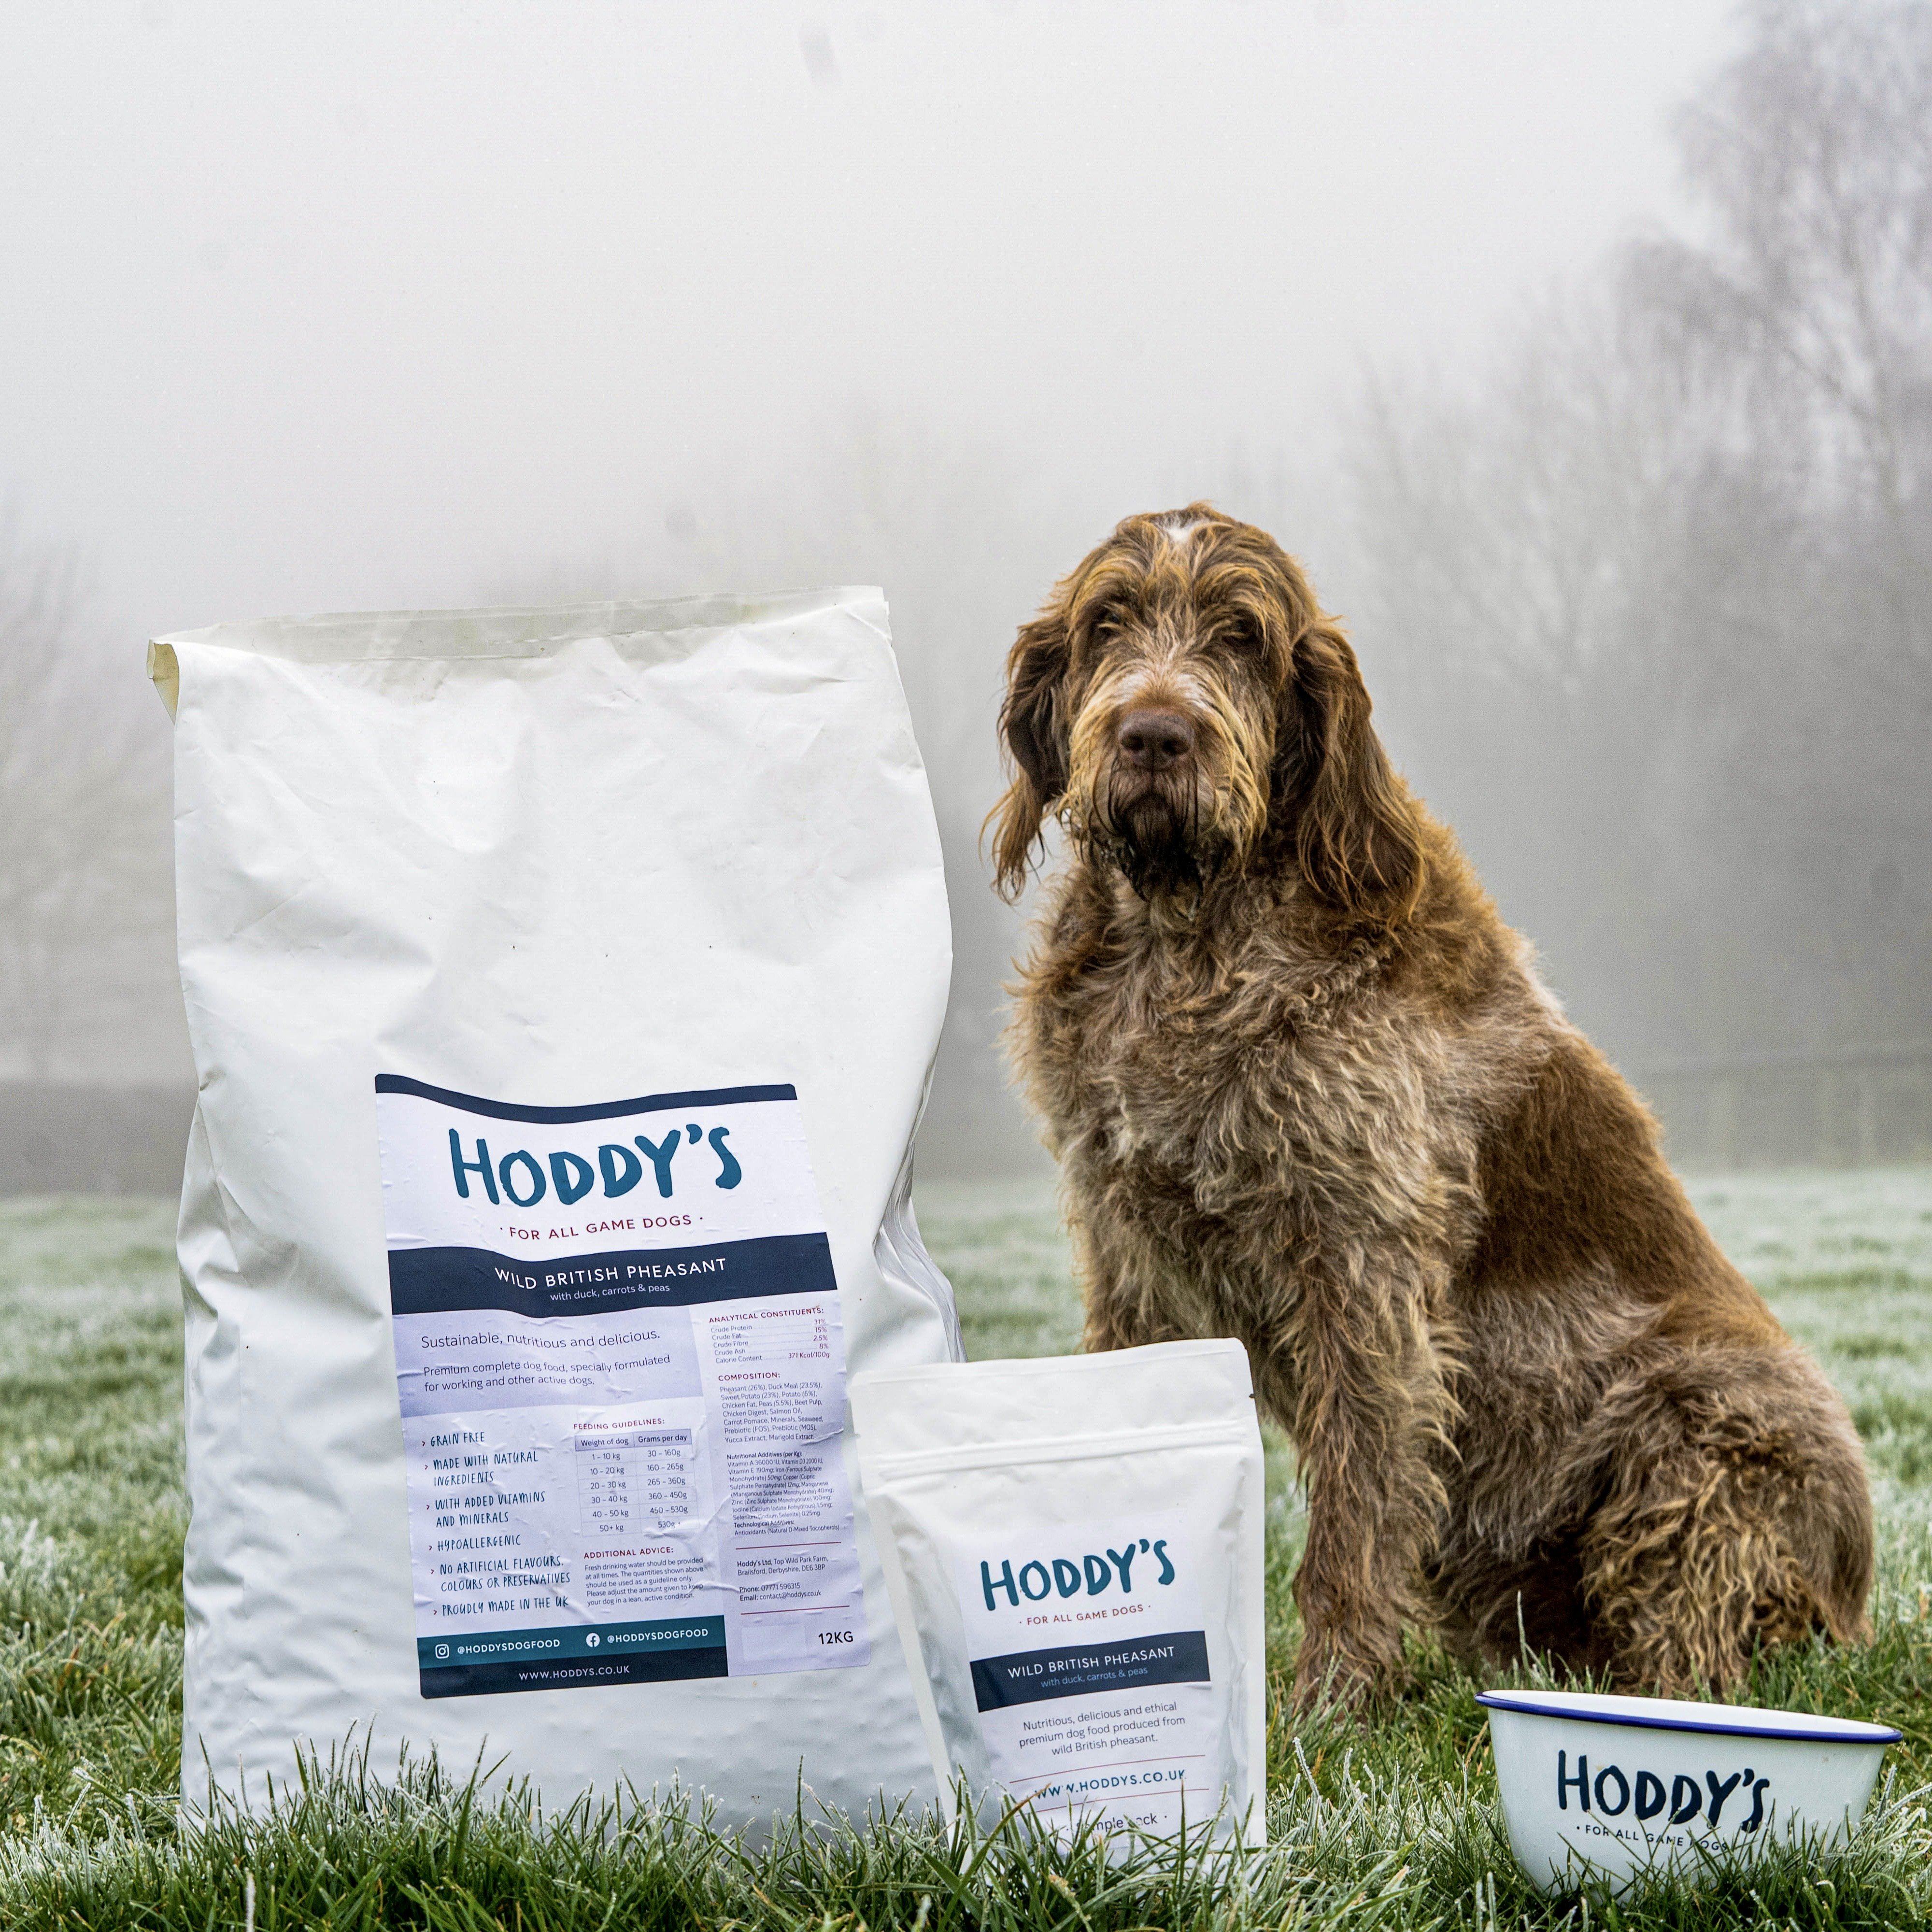 Hoddy's Wild British Pheasant - Free Trial - Premium Free trial from Hoddy's Premium Dog Food - Just £0! Shop now at Hoddy's Premium Dog Food